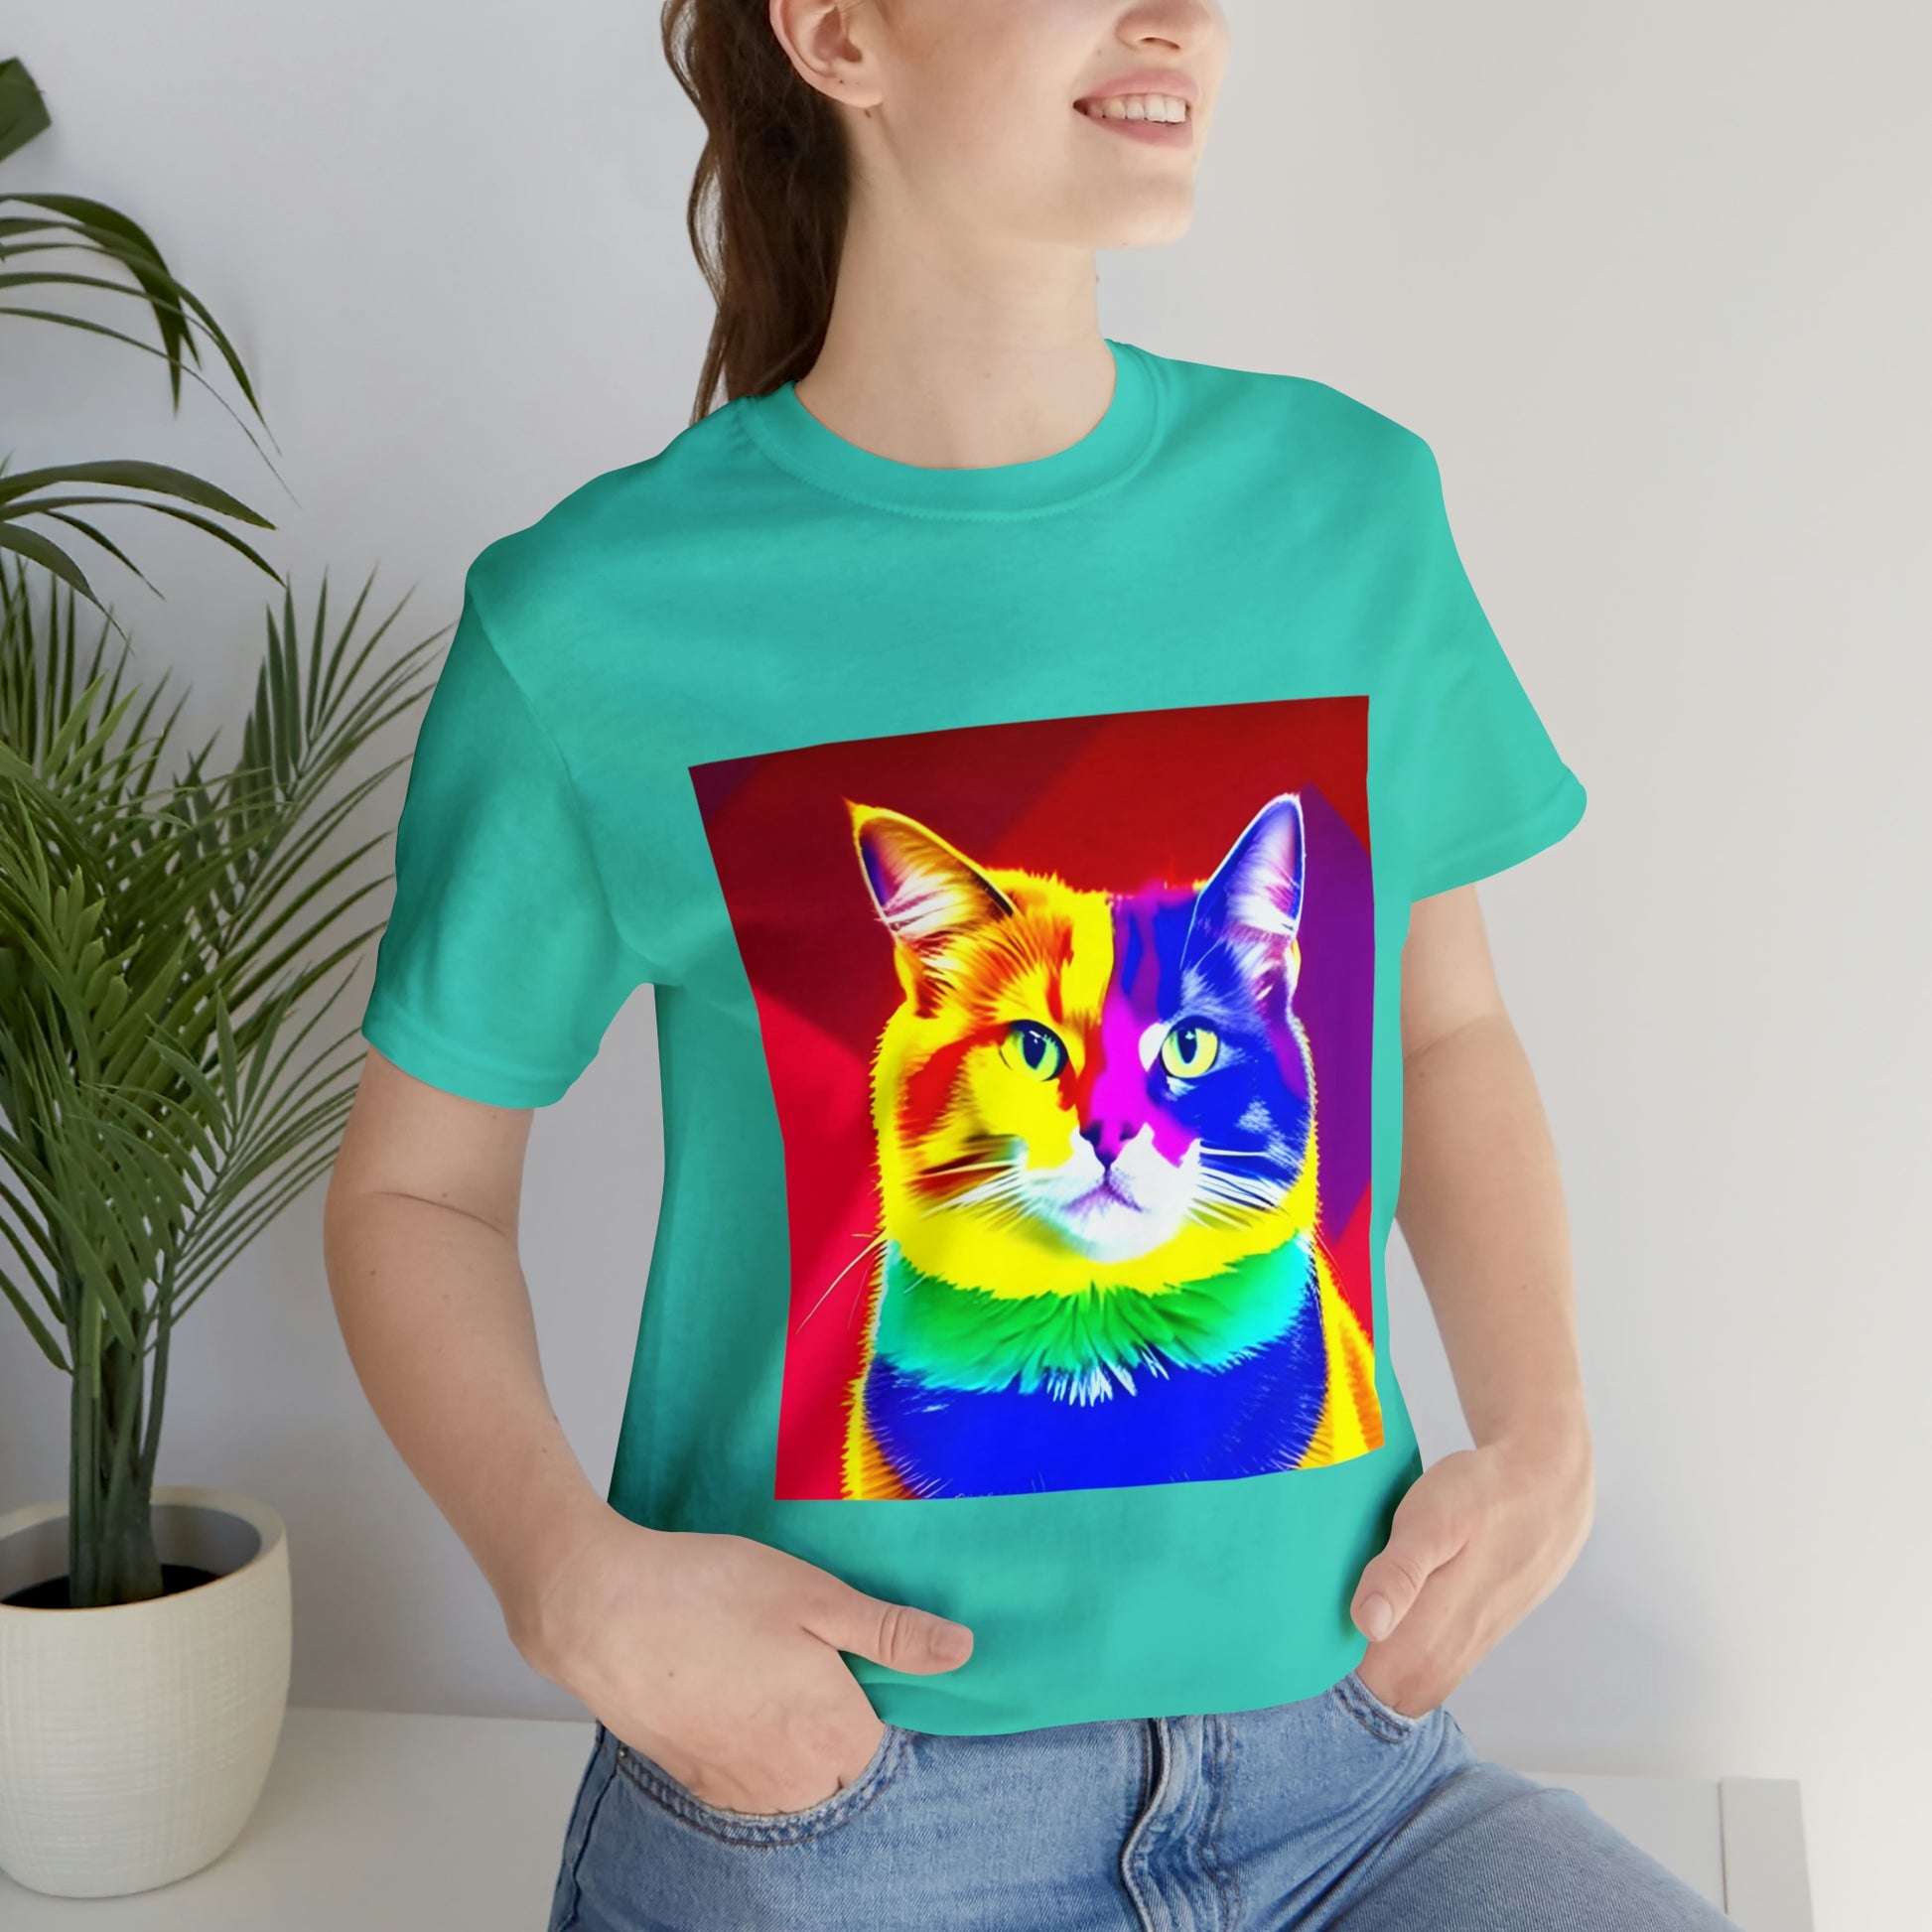 Rainbow Pride Cat T-shirt, Cat LGBTQ shirt, colorful cat shirt, cute Lgbt tee, funny kawaii cat tshirt, Purride cat shirt, cat lover gift